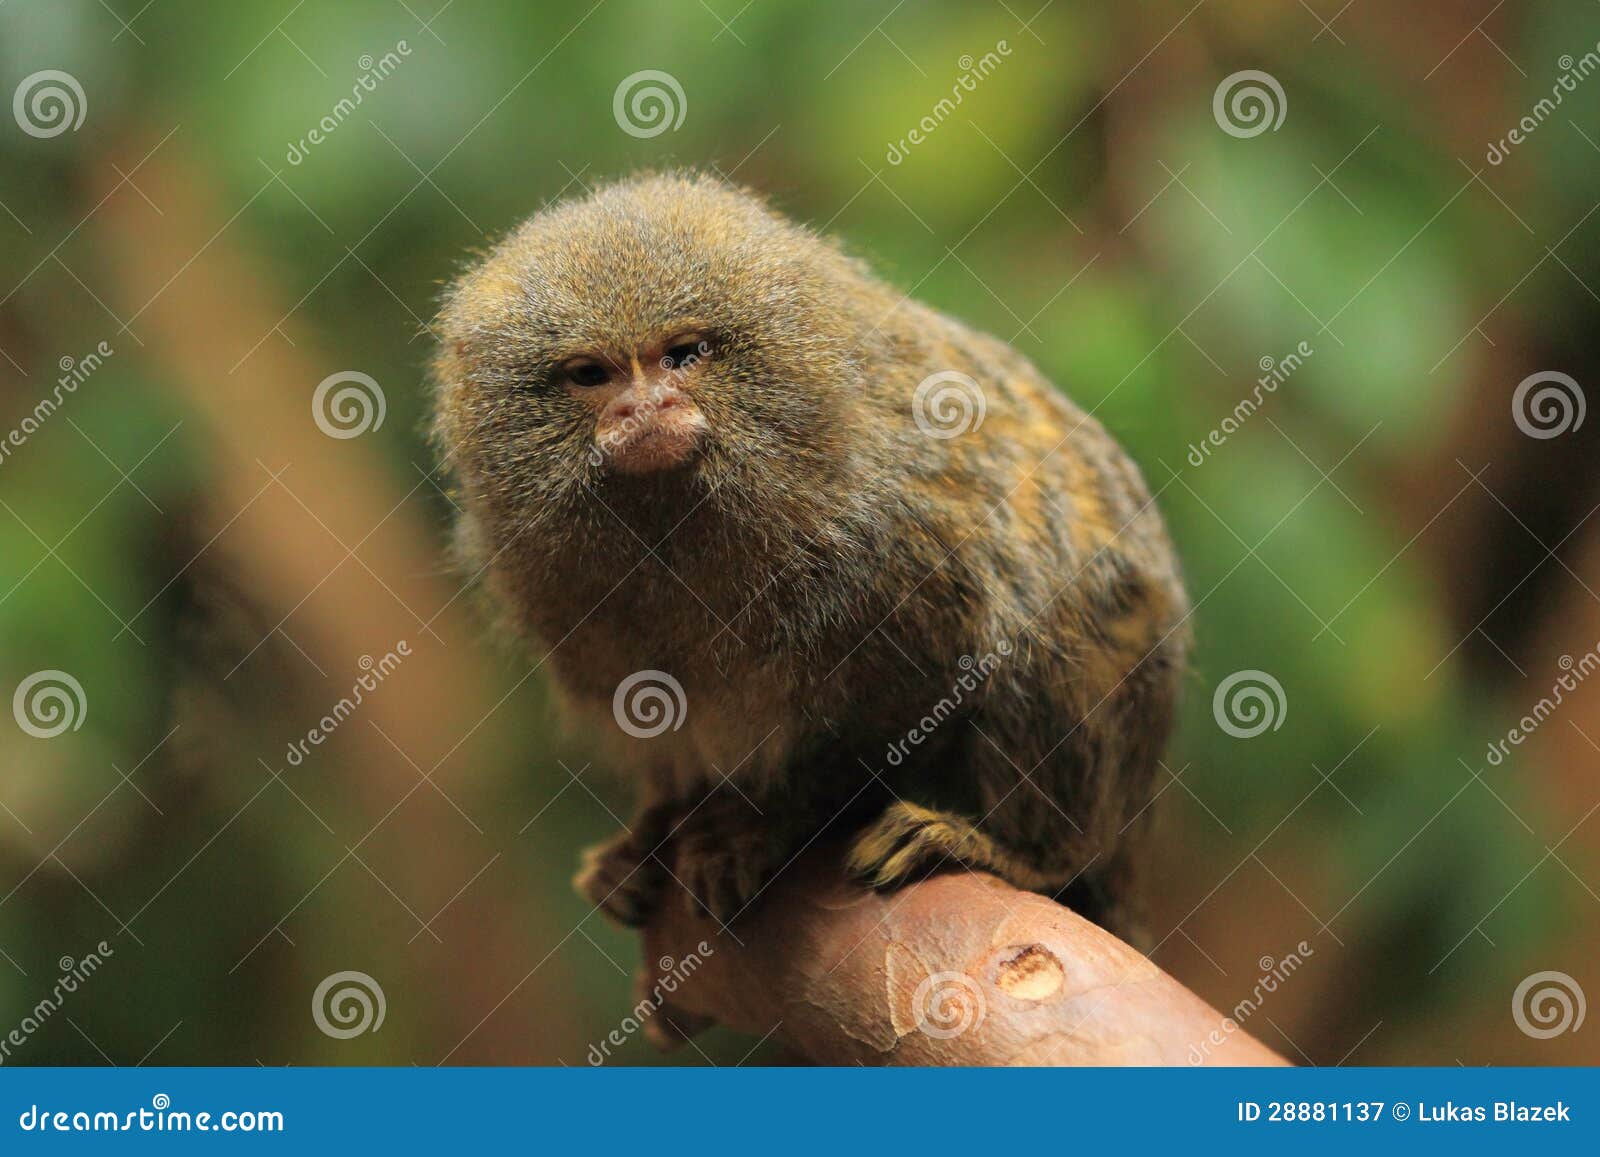 pygmy marmoset